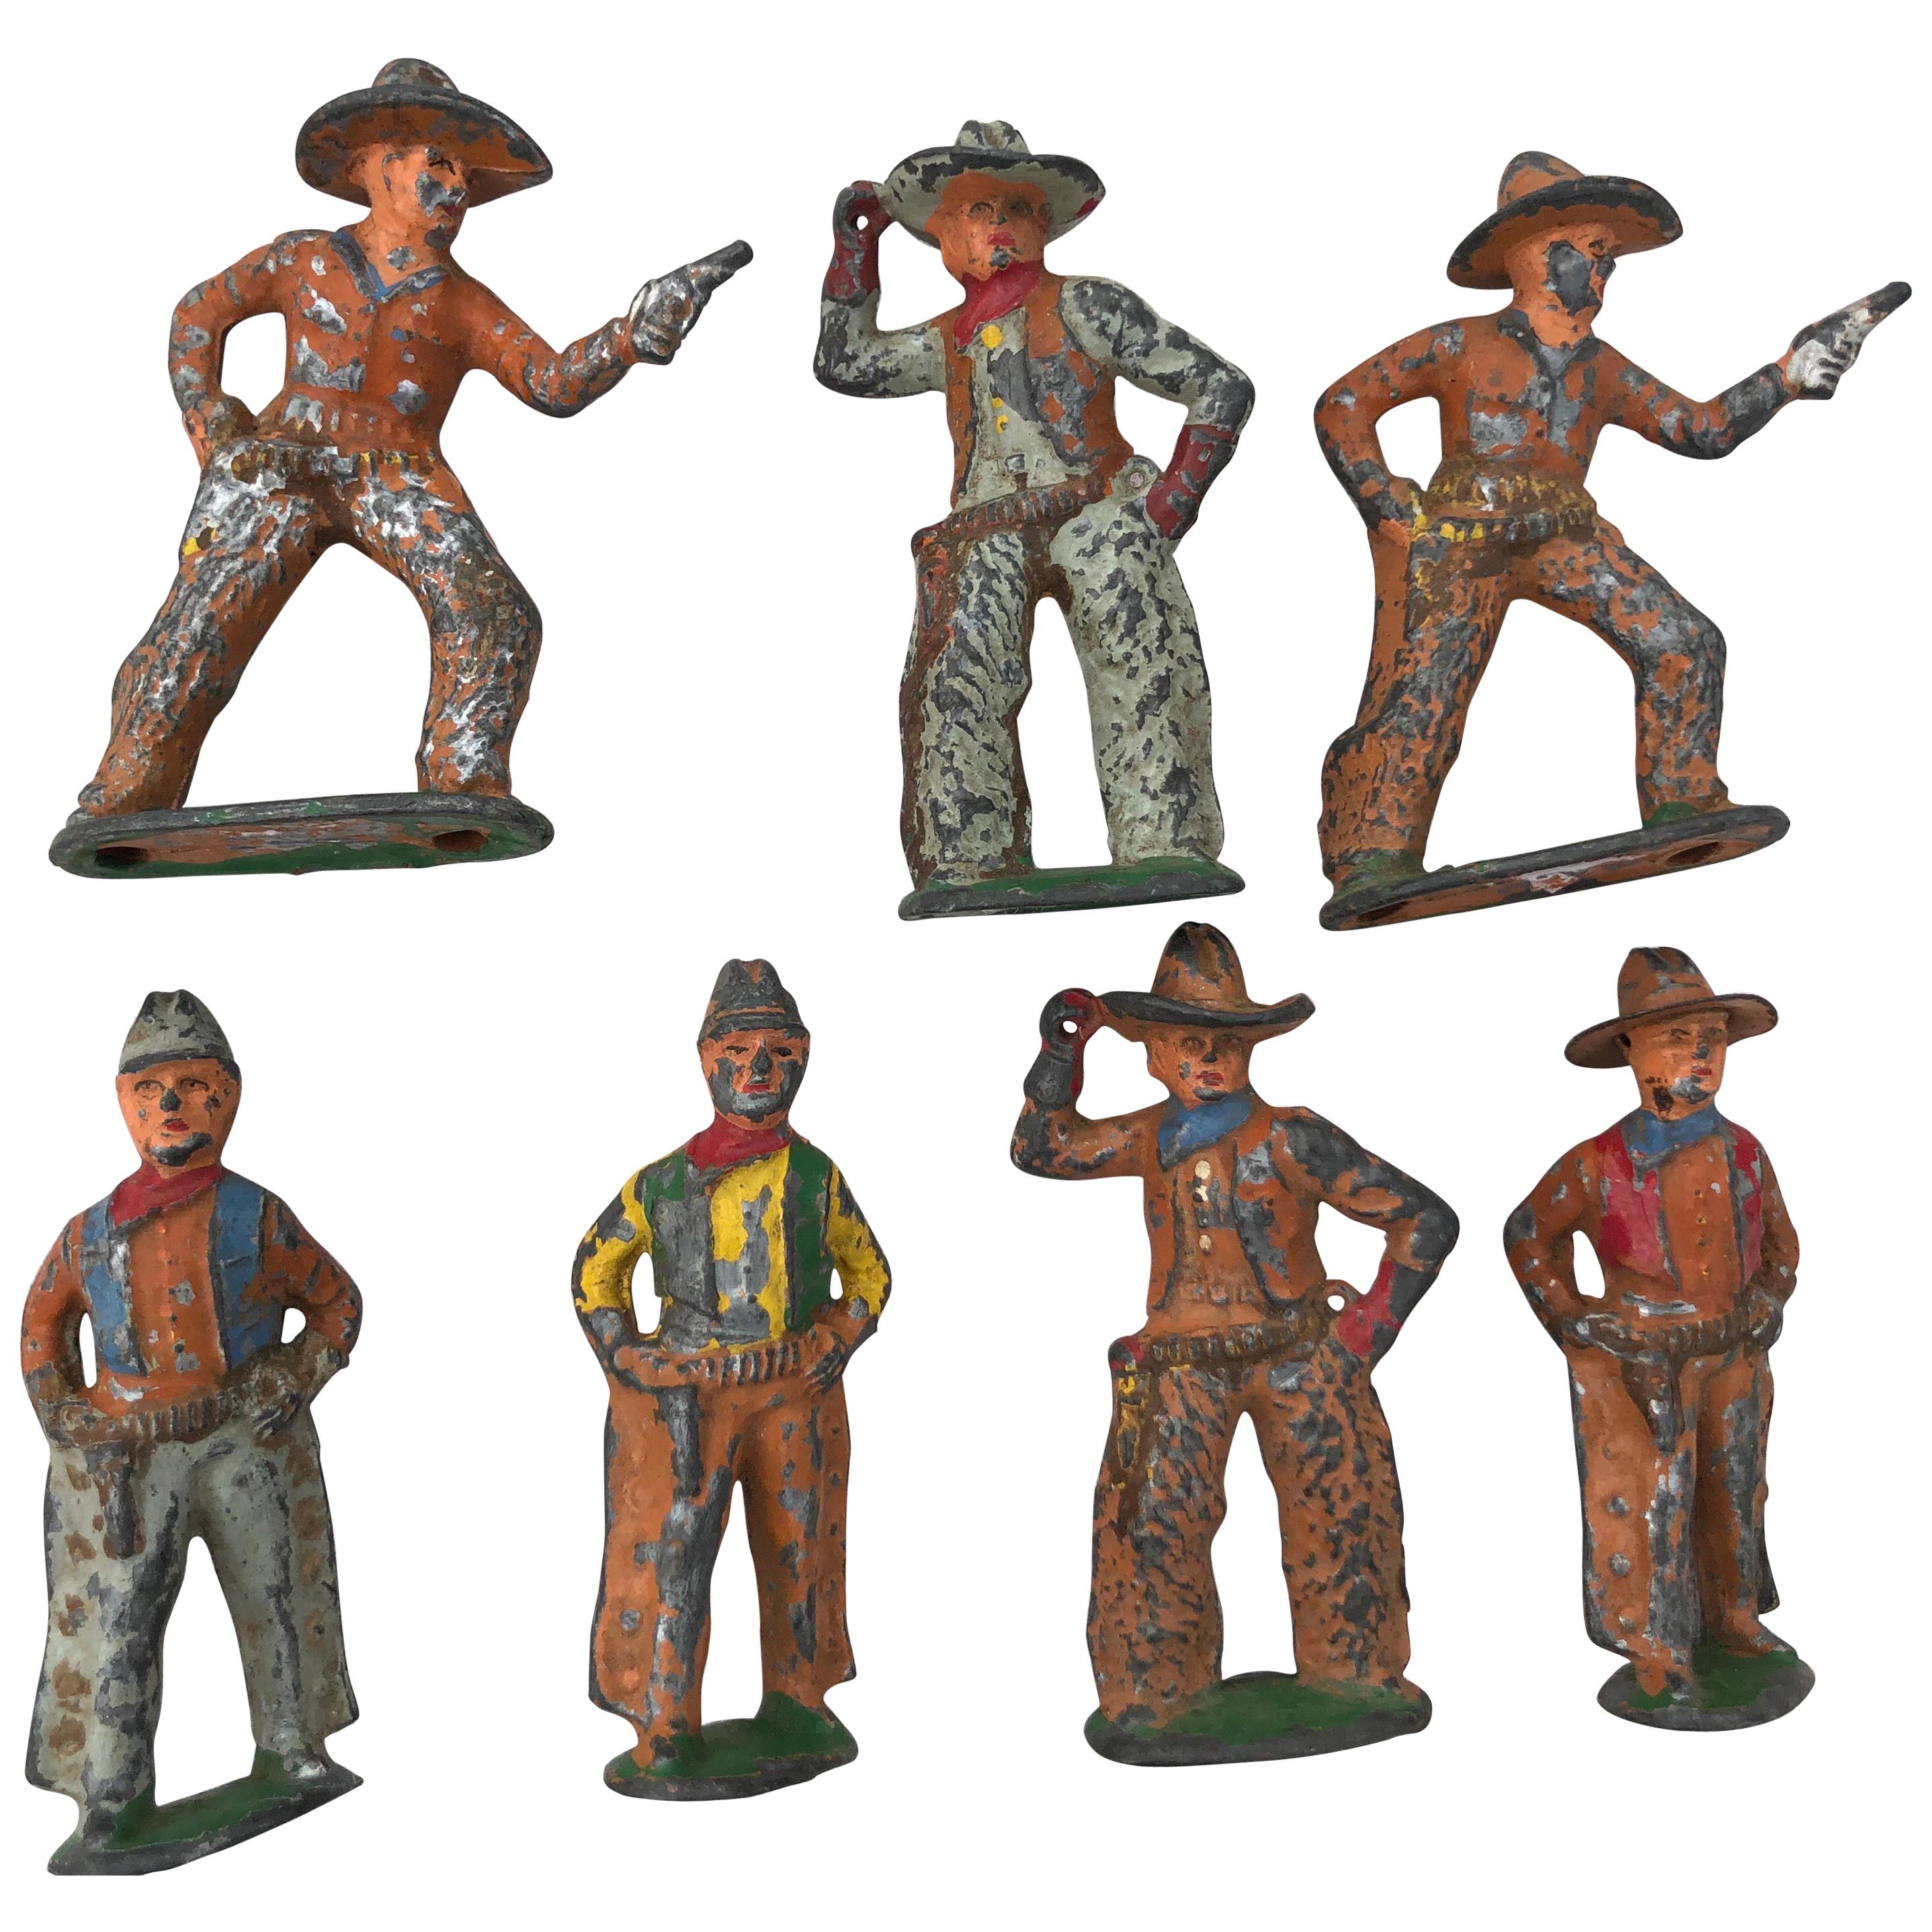 Sold-Set of Antique Lead Toy Cowboys, circa 1950